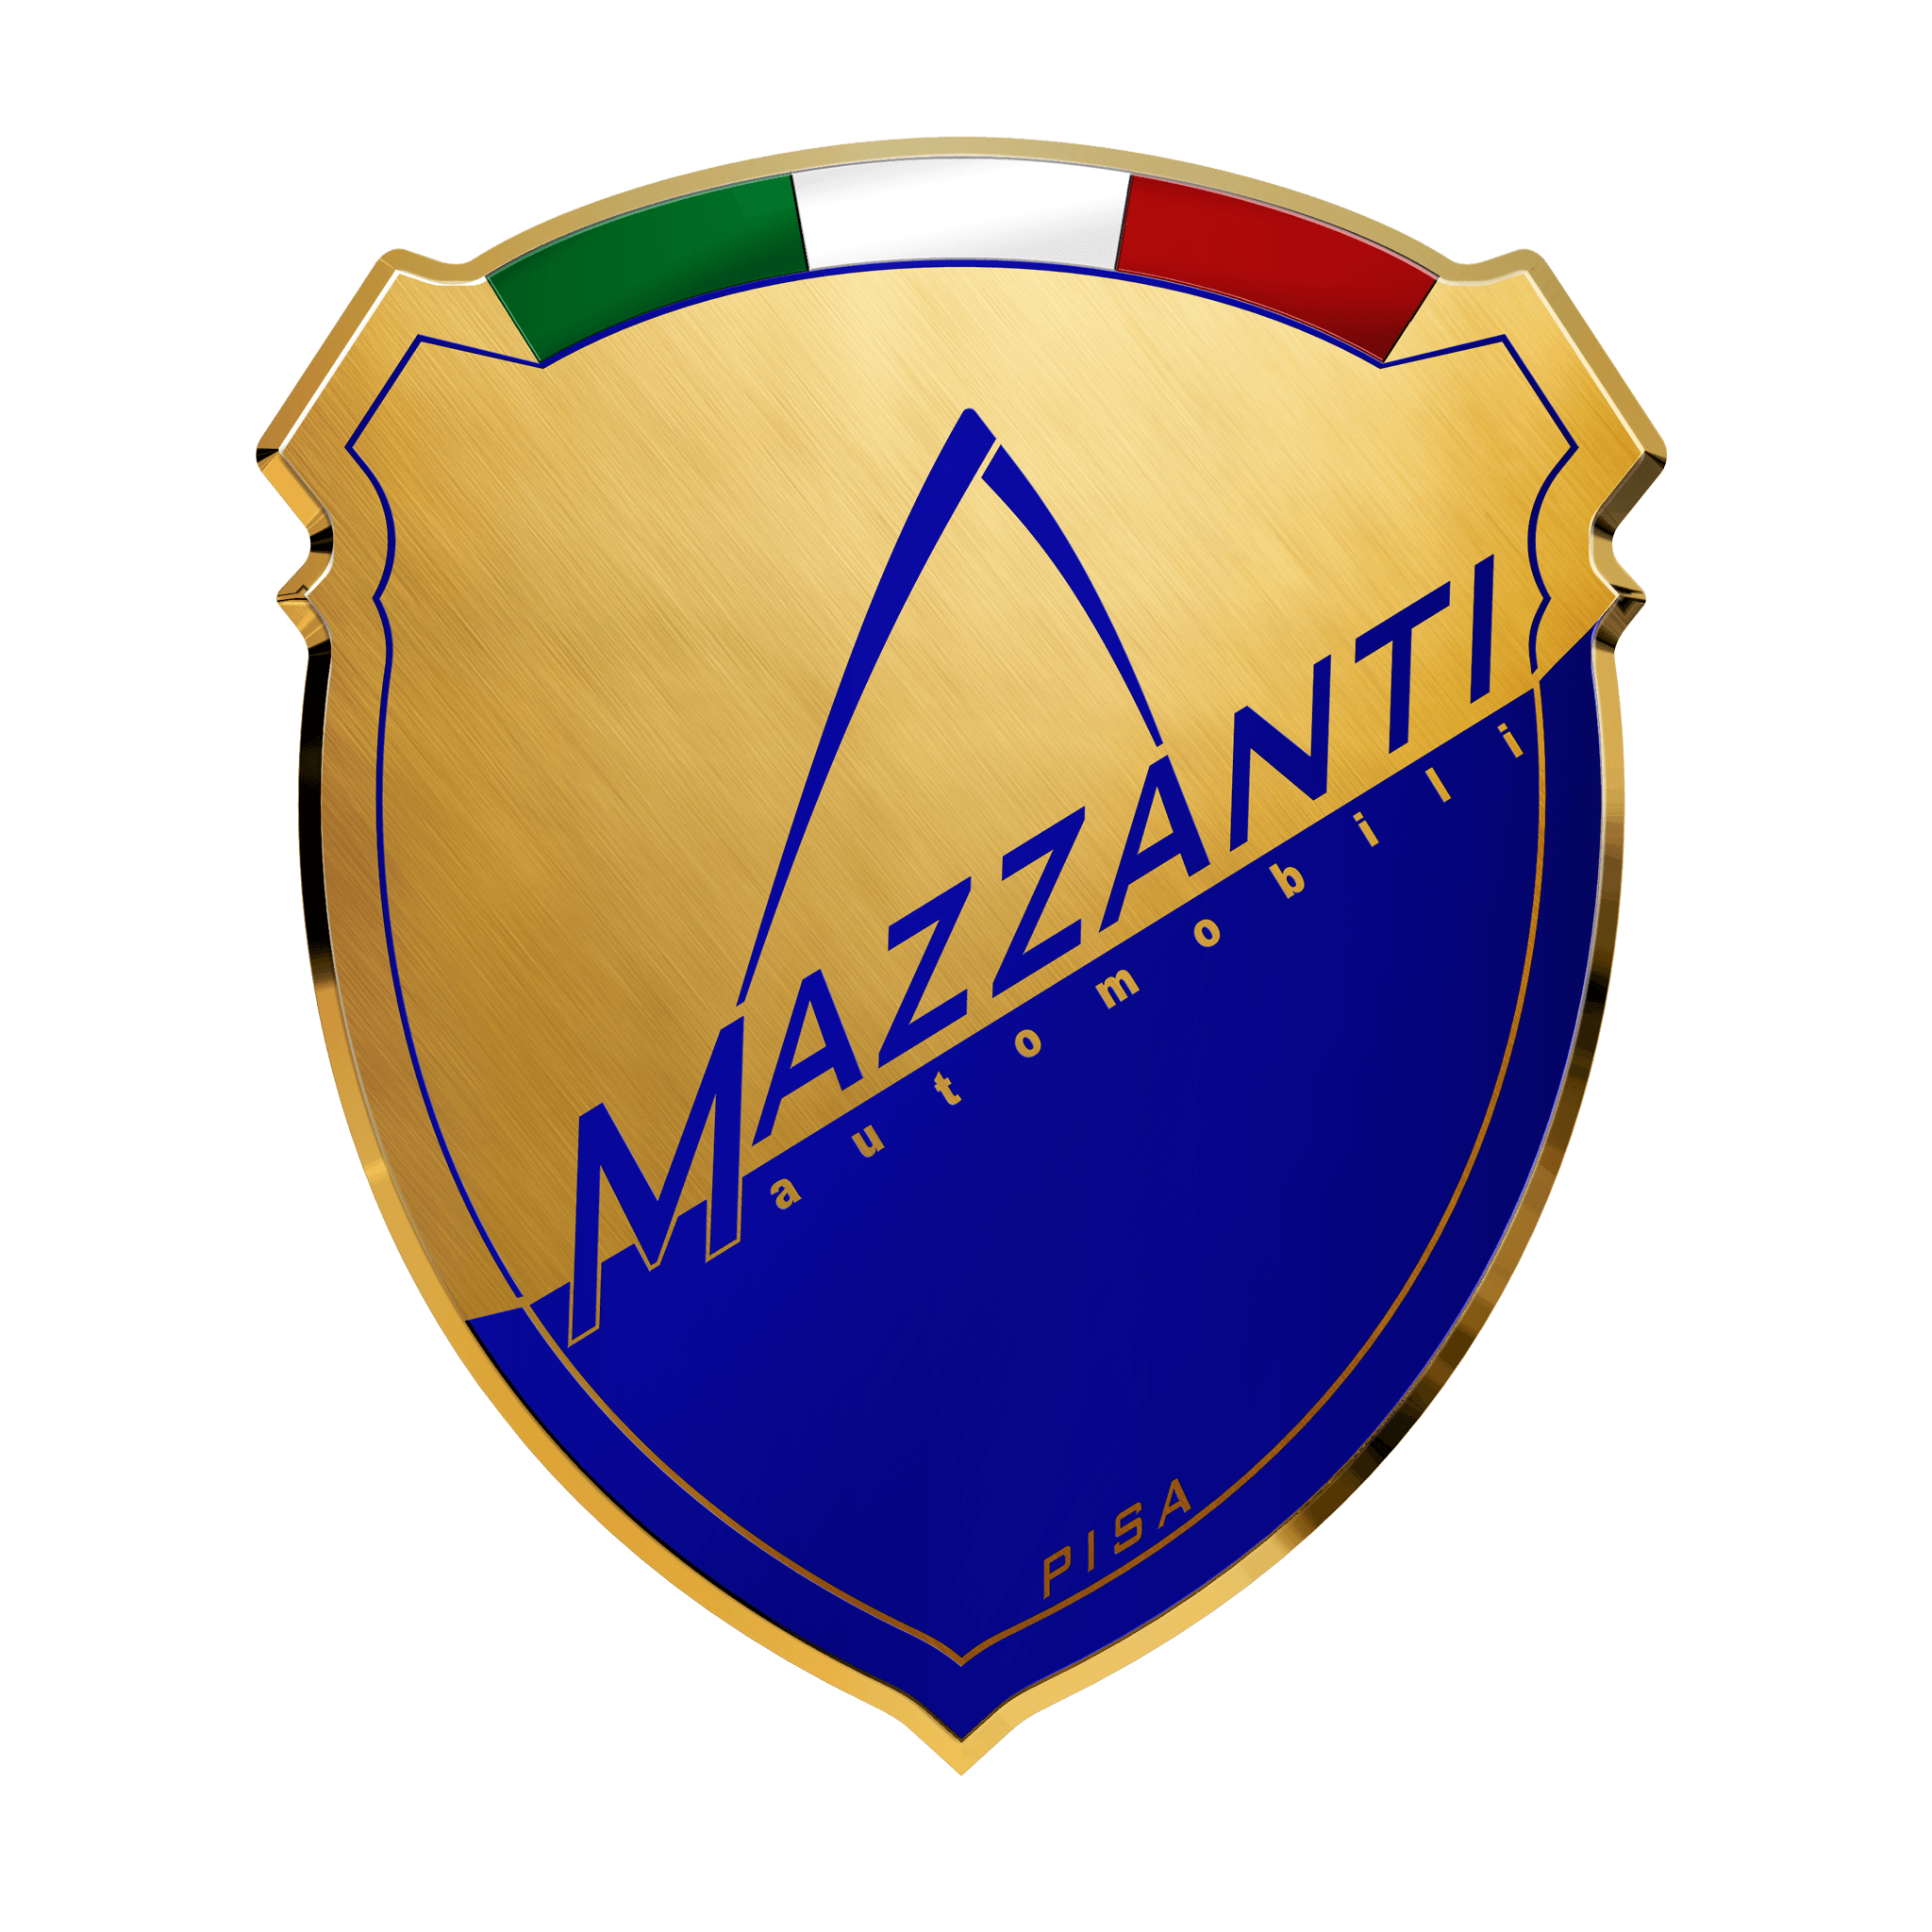 Cizeta Logo - Italian Car Brands, Companies & Manufacturer Logos with Names